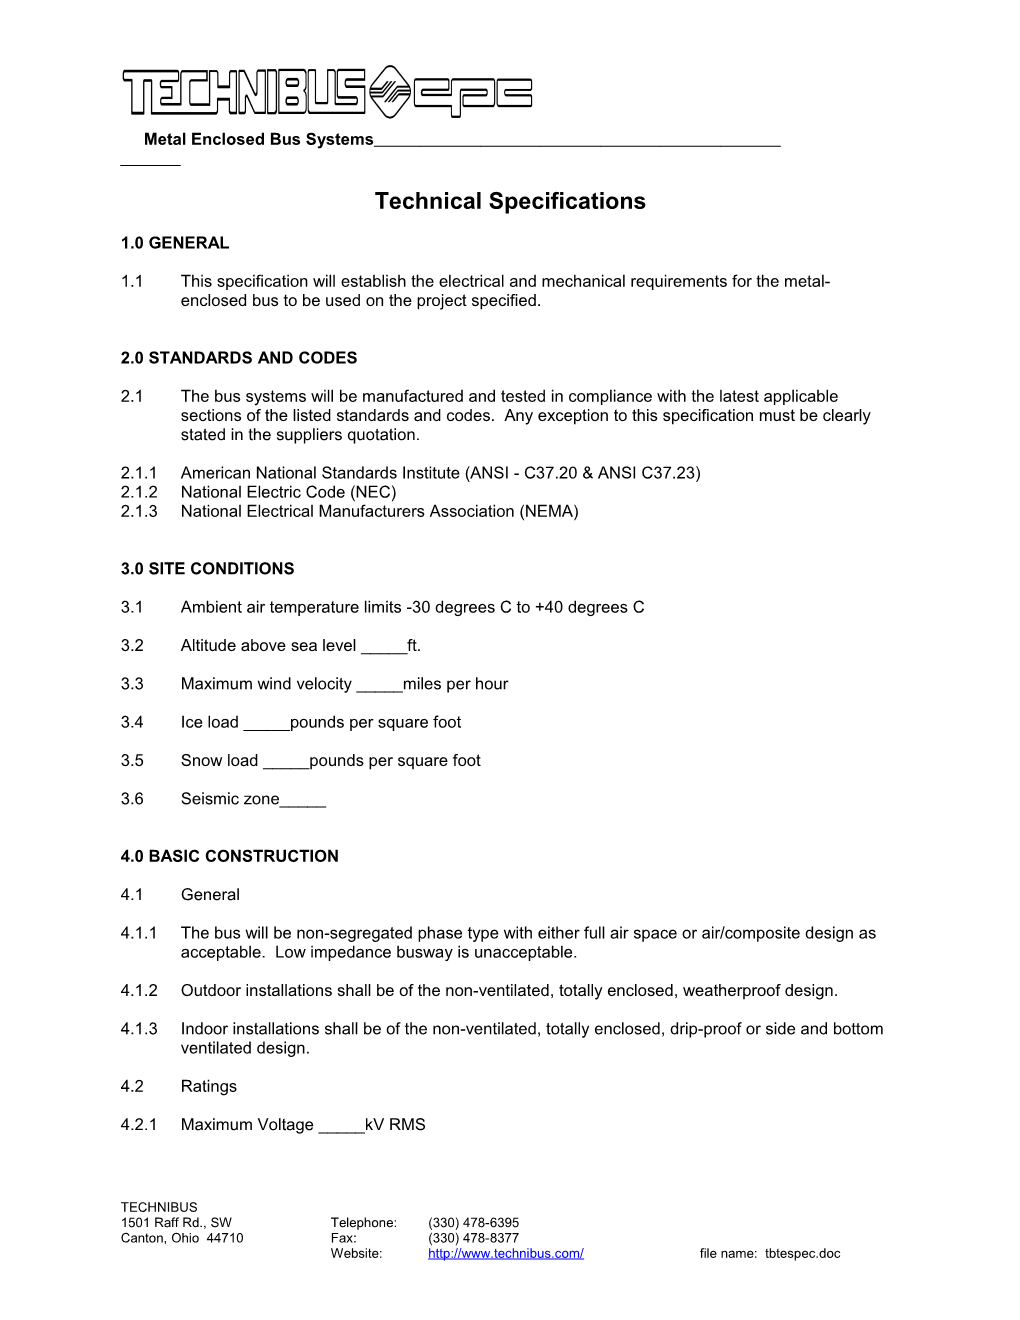 Technibus Technical Specification